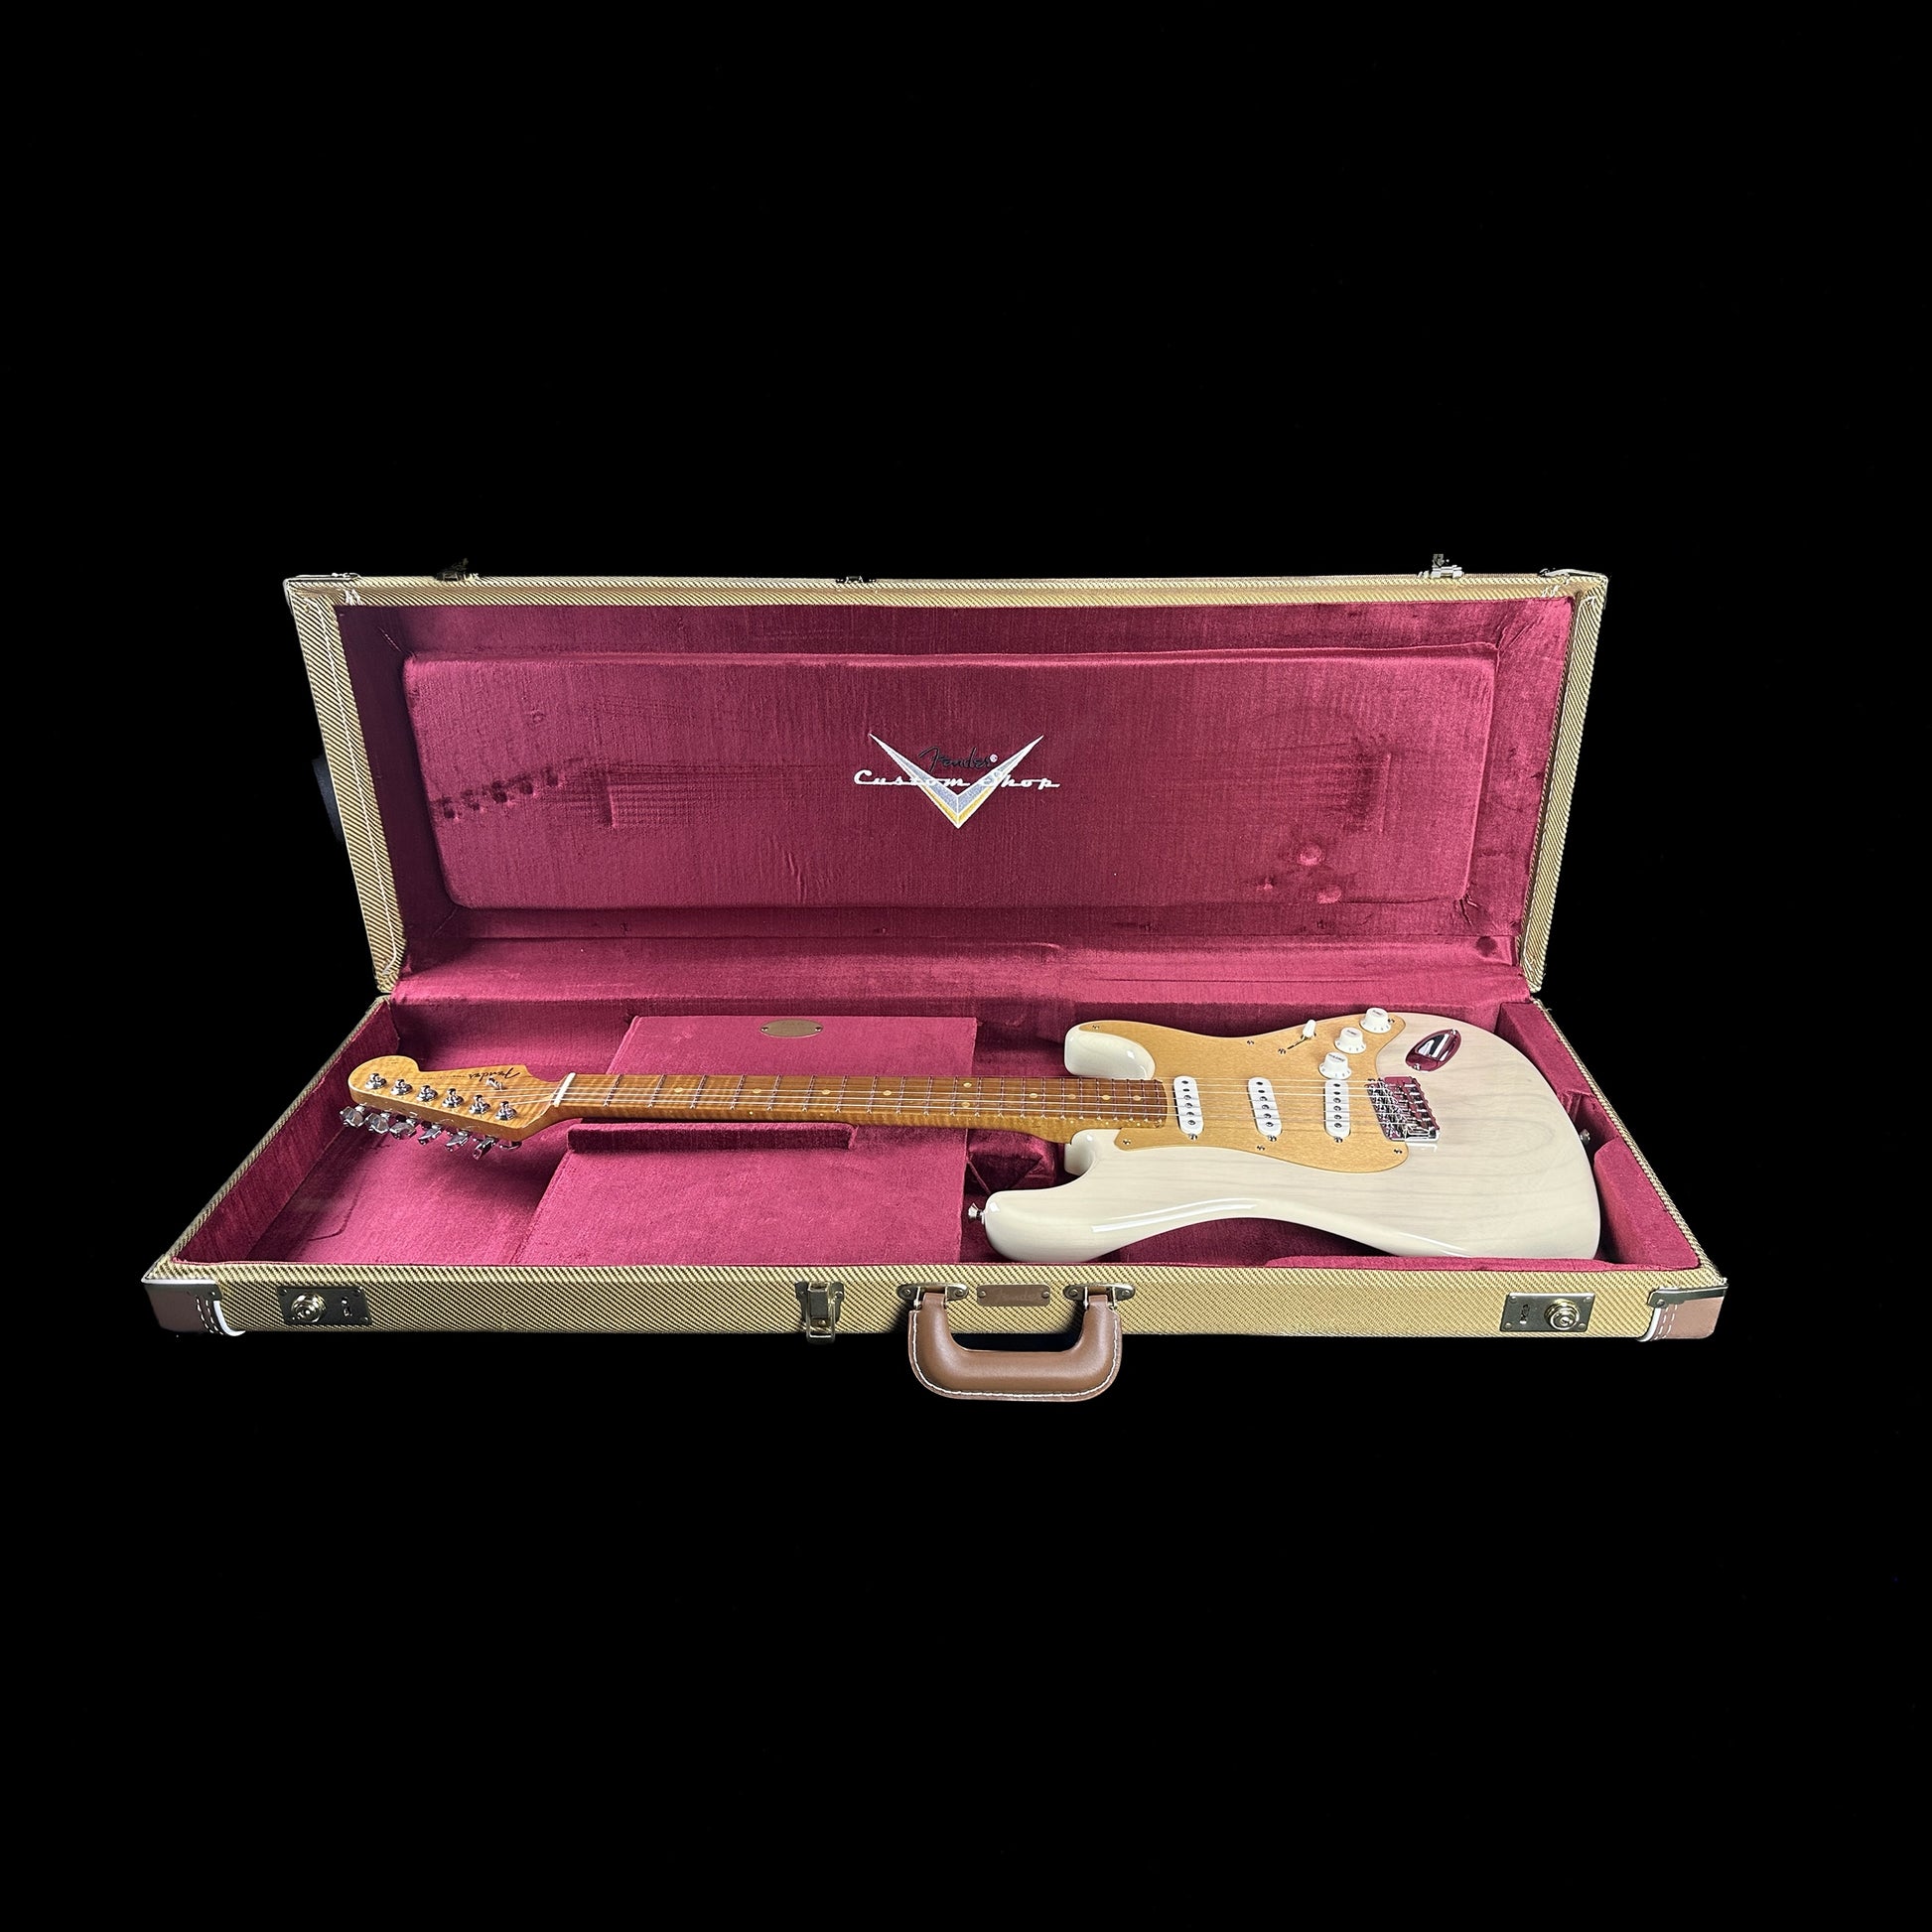 Used Fender Custom Shop Stratocaster NOS Honey Blonde in case.